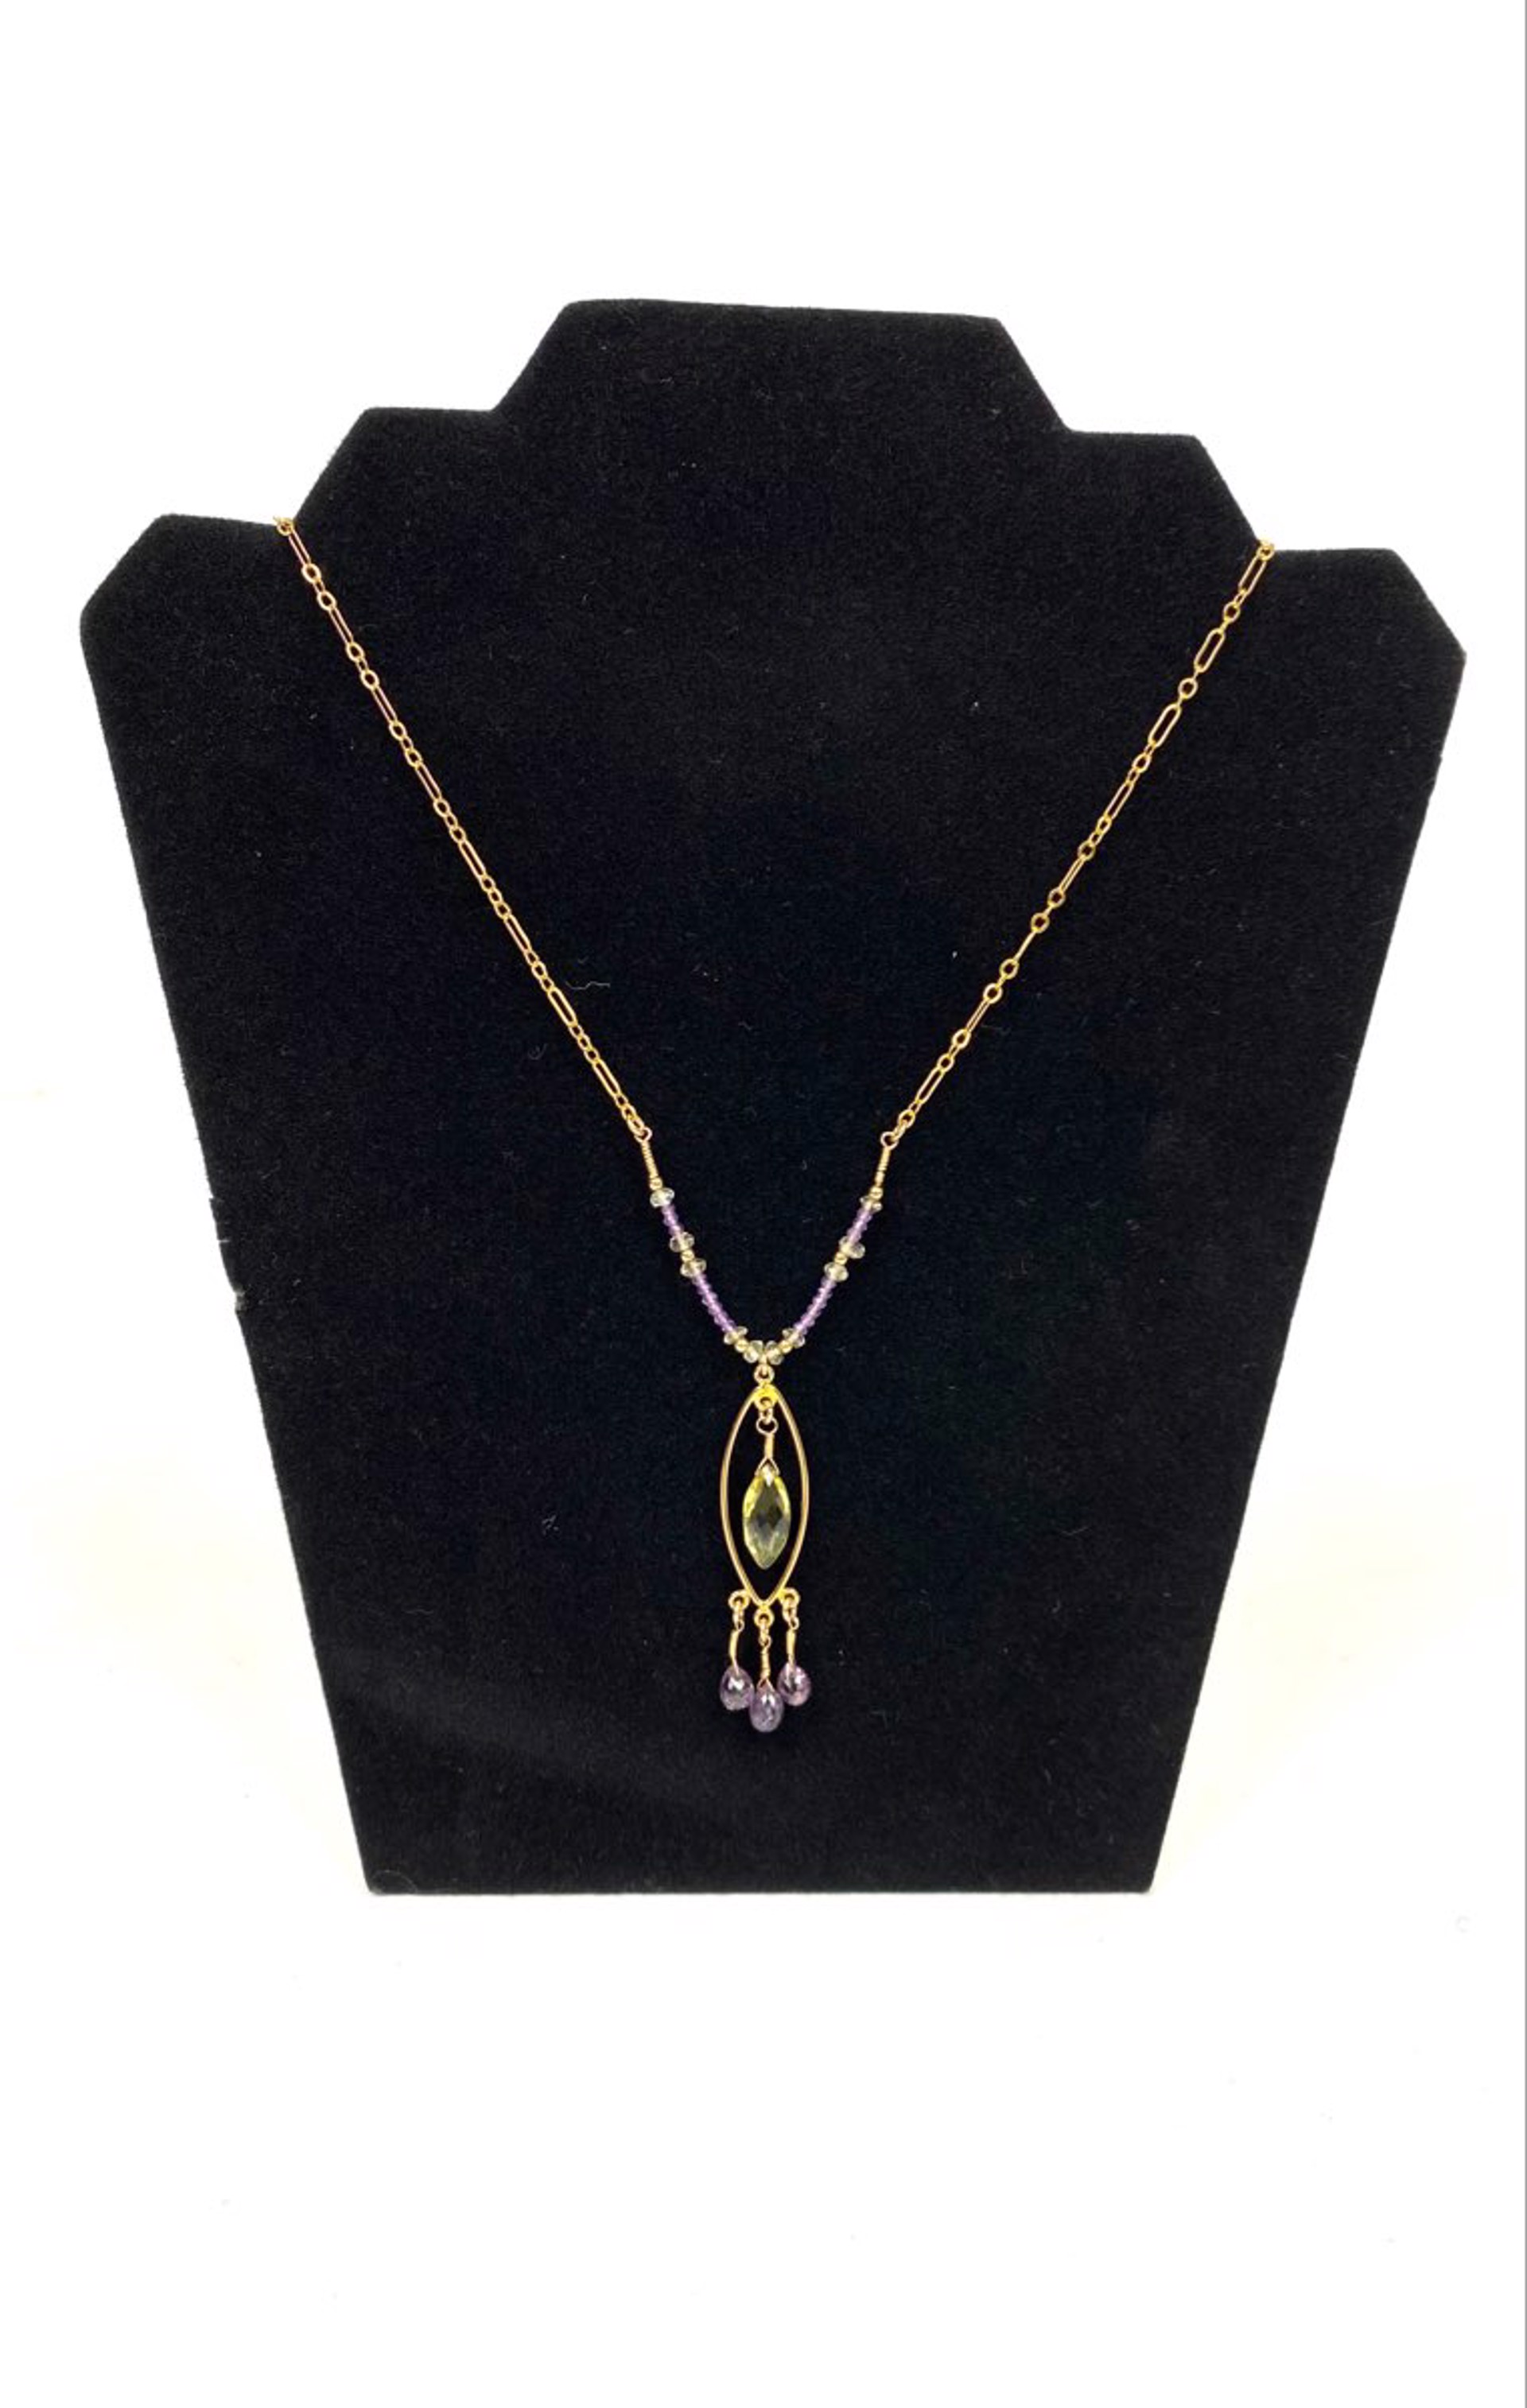 Lemon Quartz, Purple Spinel, Amethyst, and 14K Gold Chain Necklace Infinity Pendant Set by Lisa Kelley